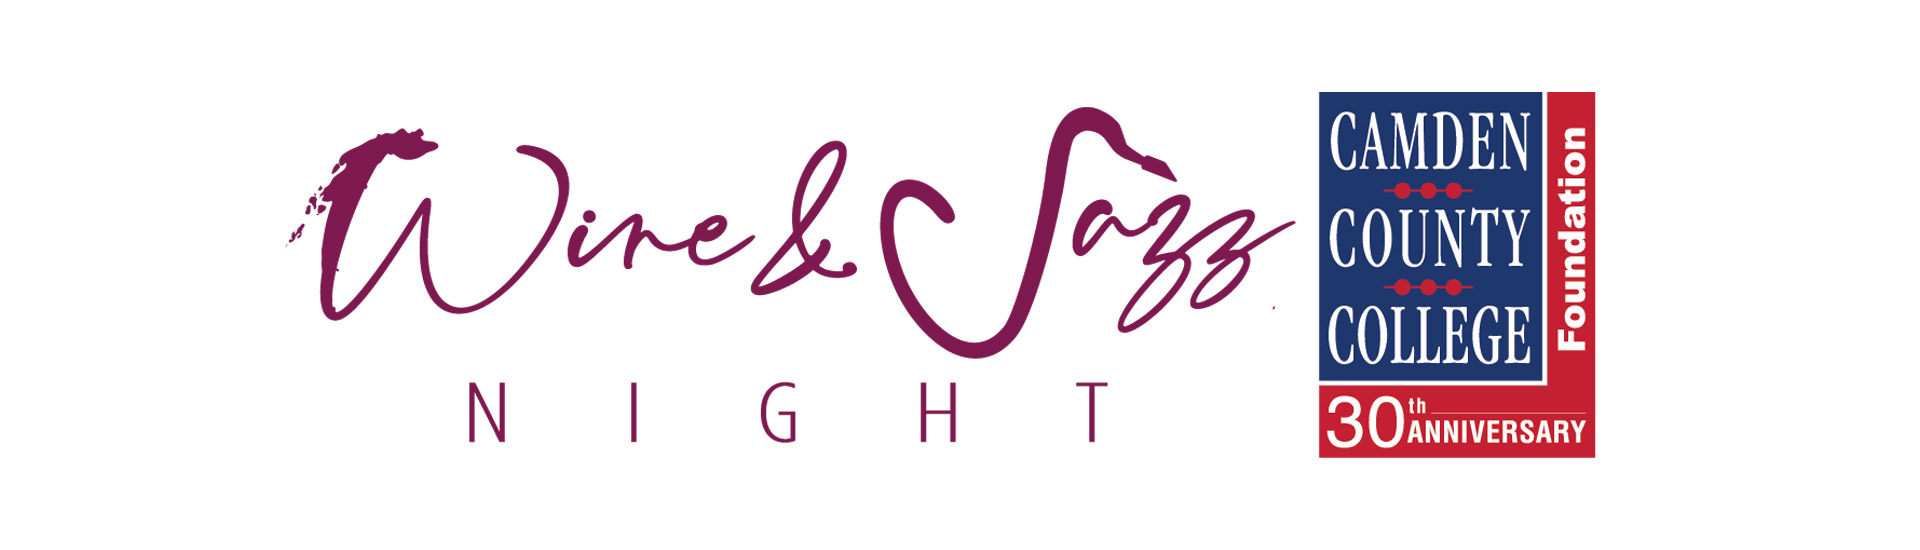 wine and jazz night - camden county colllege foundation logo